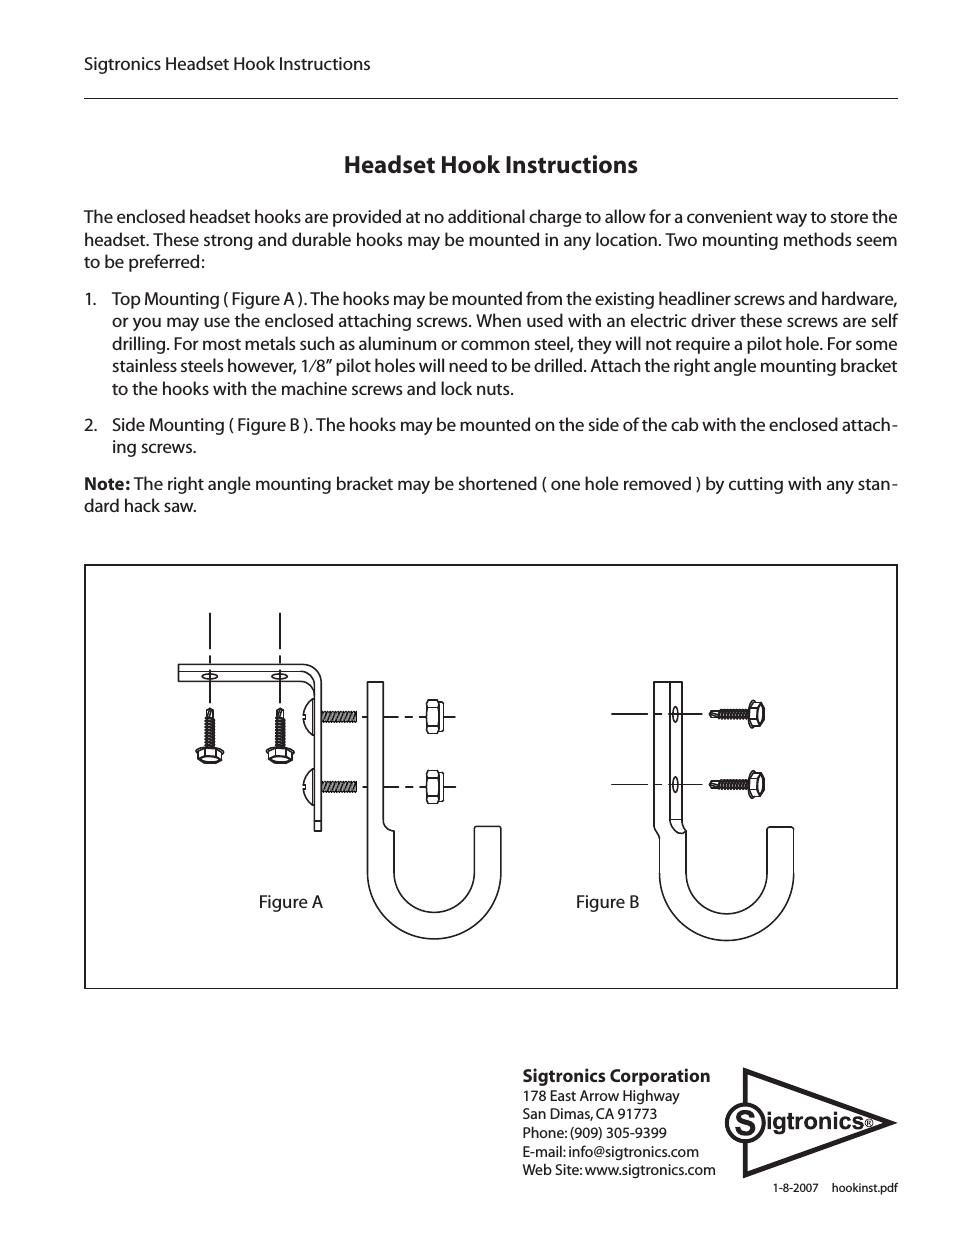 Headset Hook